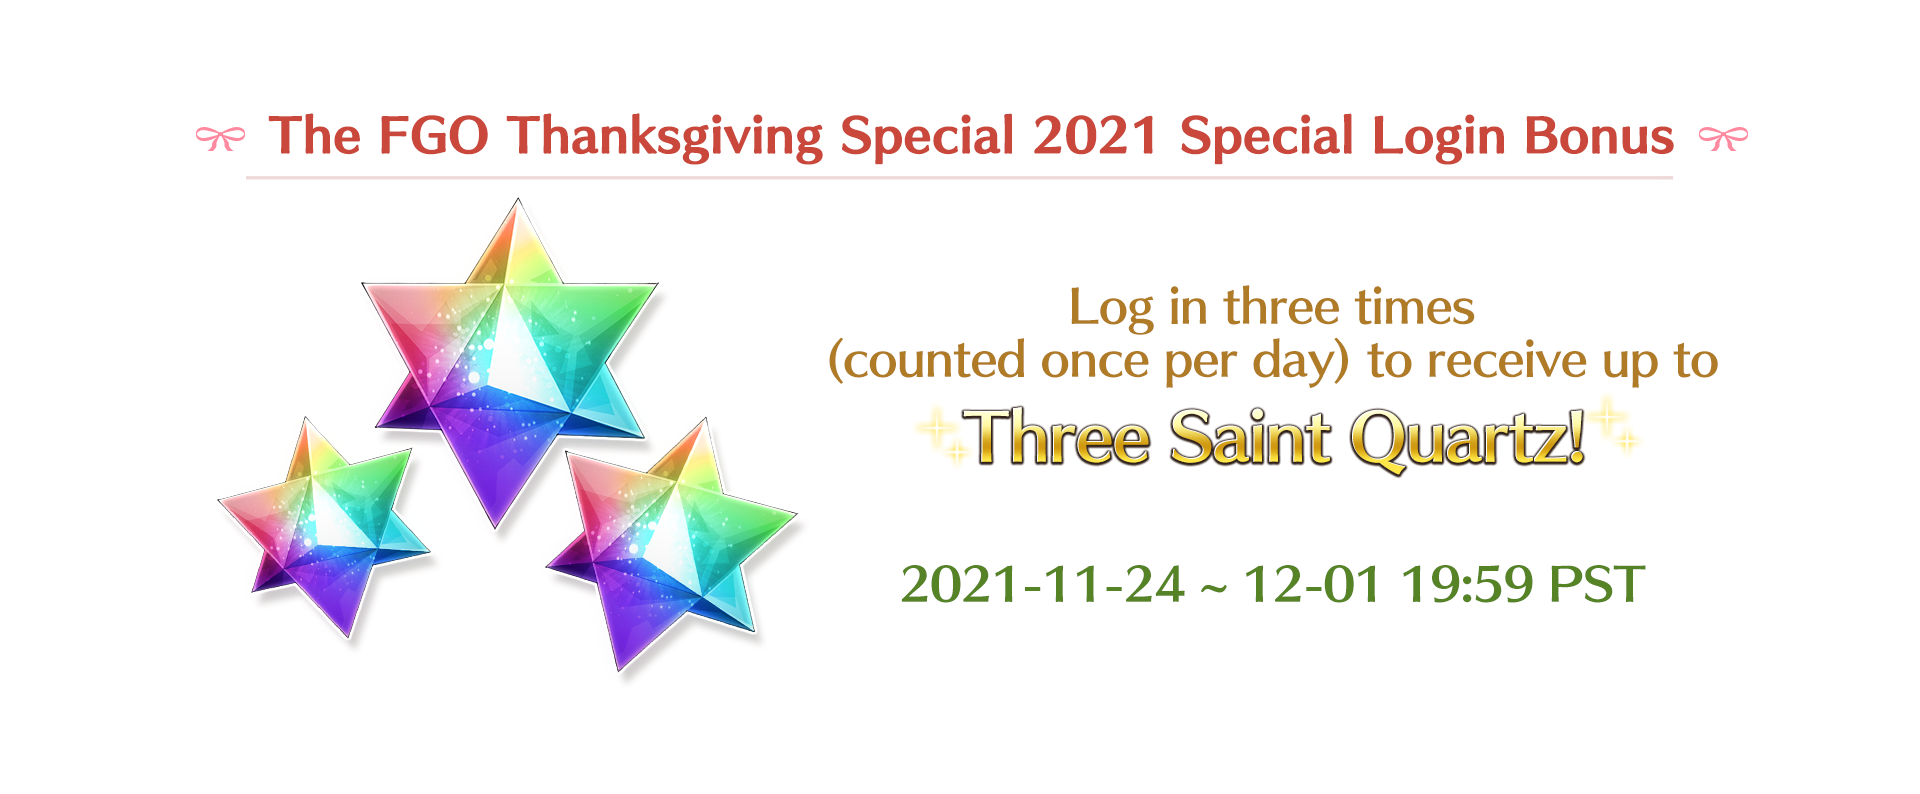 The FGO Thanksgiving Special 2021 Special Login Bonus